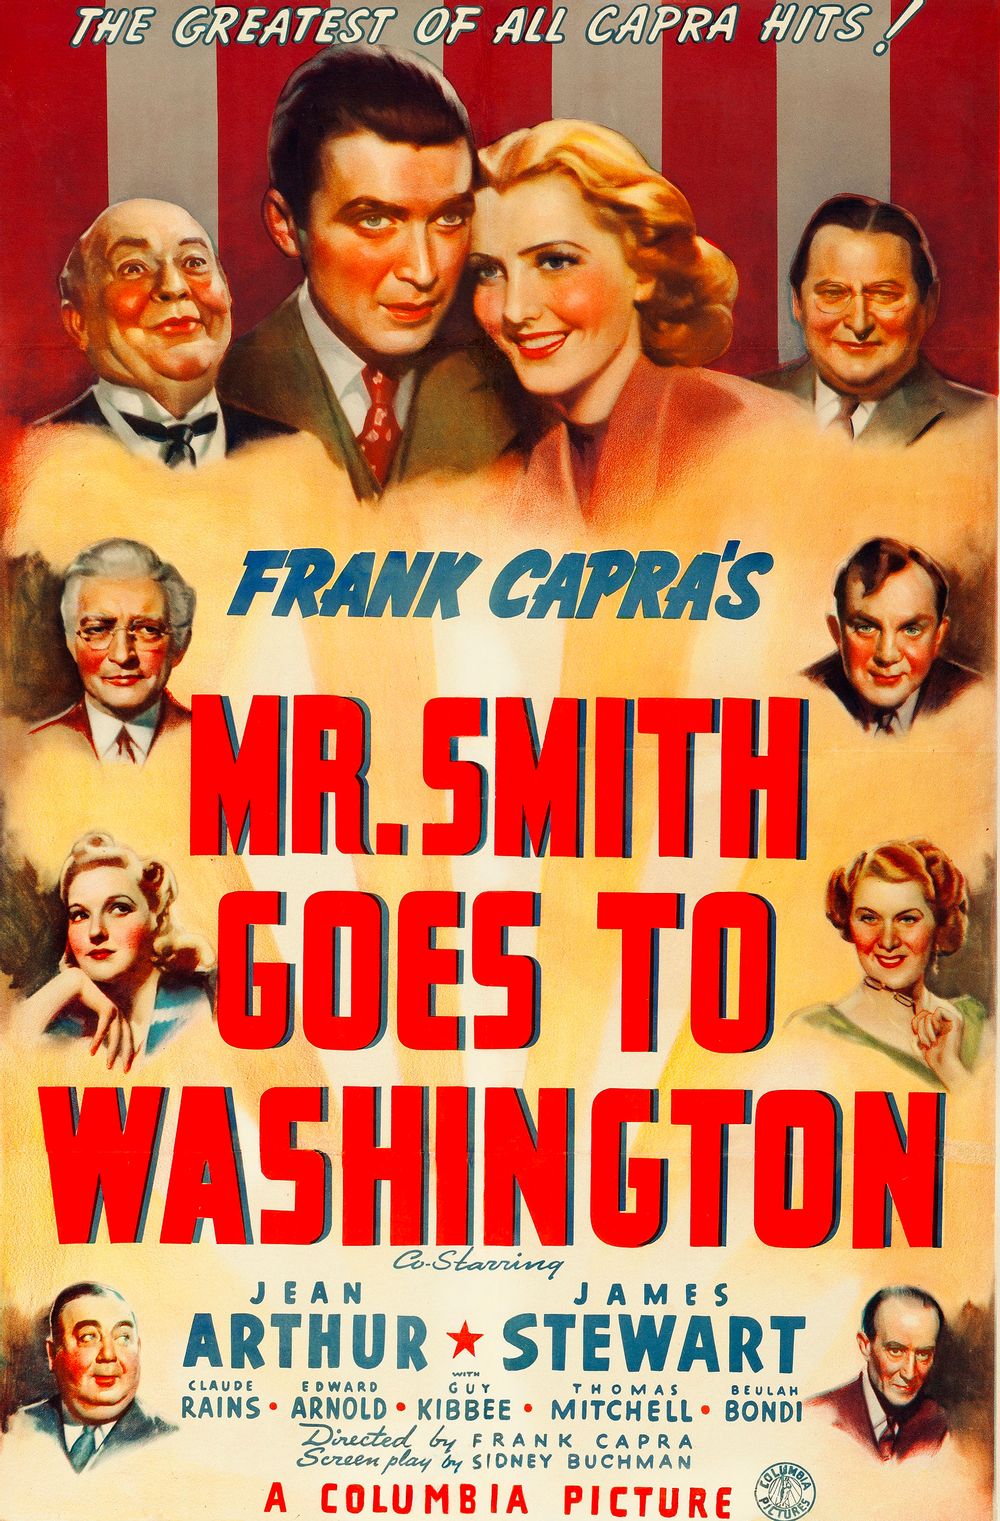 https://mediaproxy.tvtropes.org/width/1000/https://static.tvtropes.org/pmwiki/pub/images/mr_smith_goes_to_washington_1939_poster.jpg